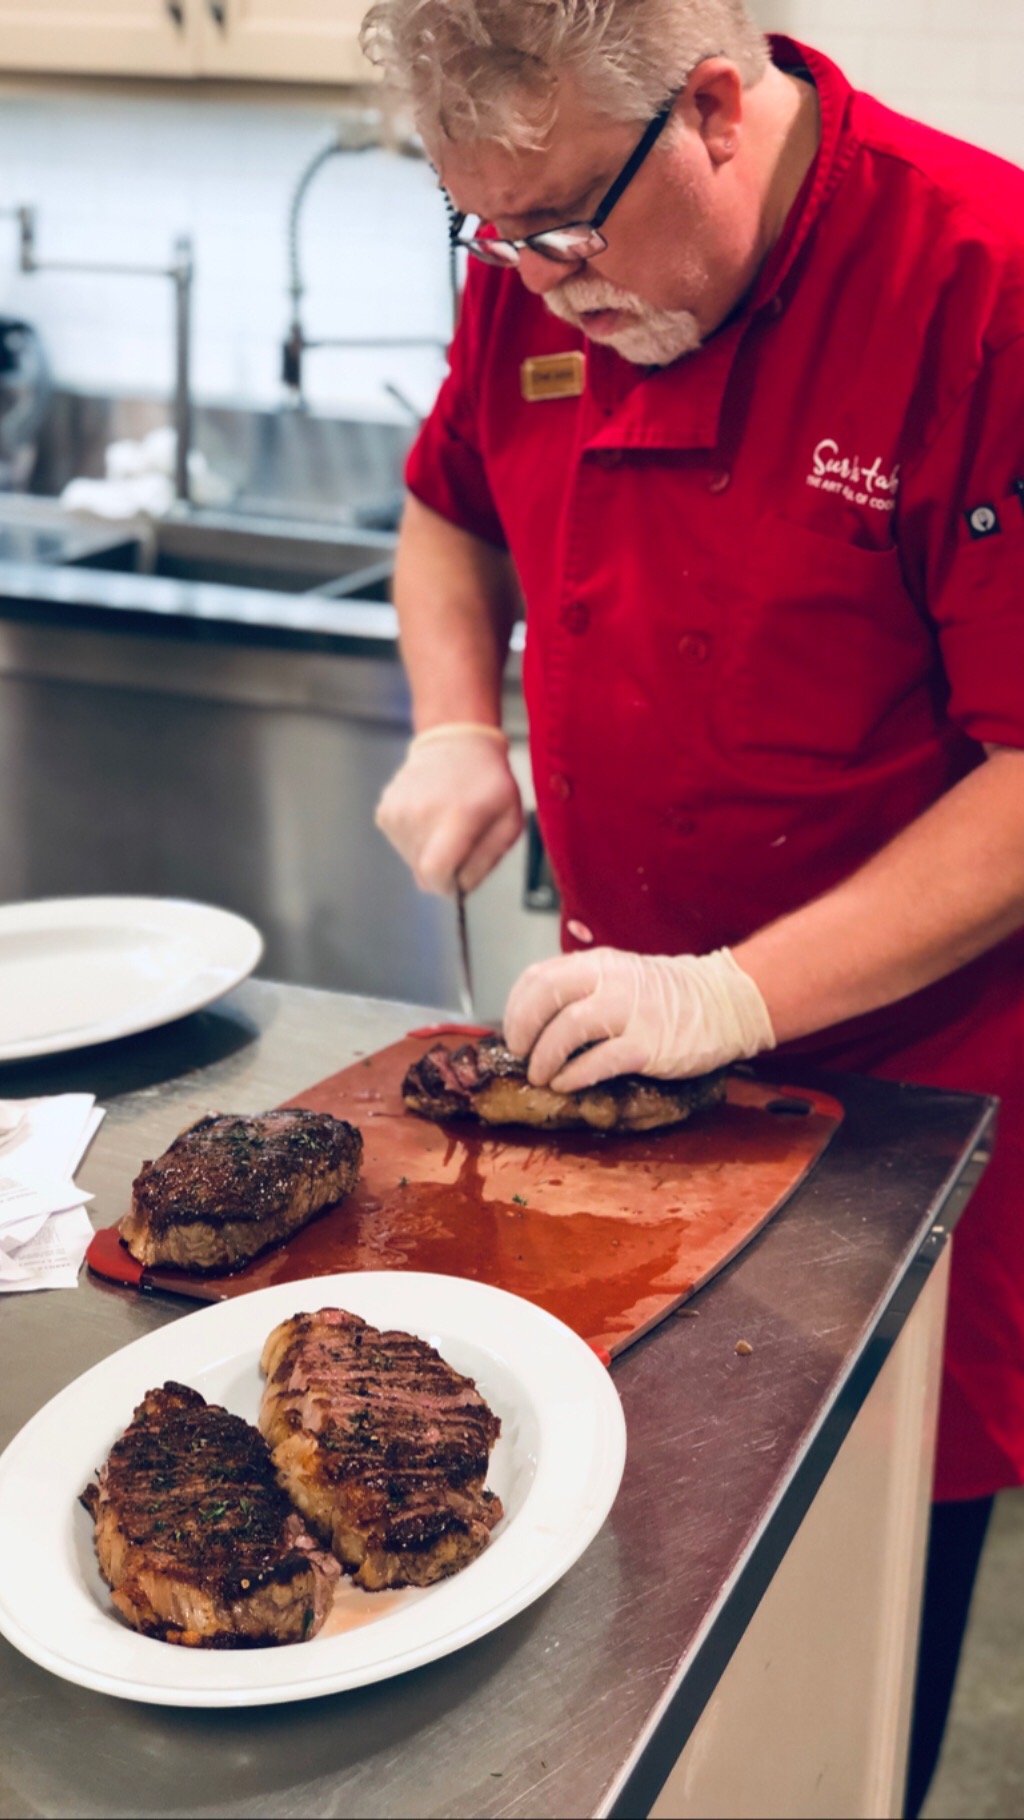 chef cutting steak